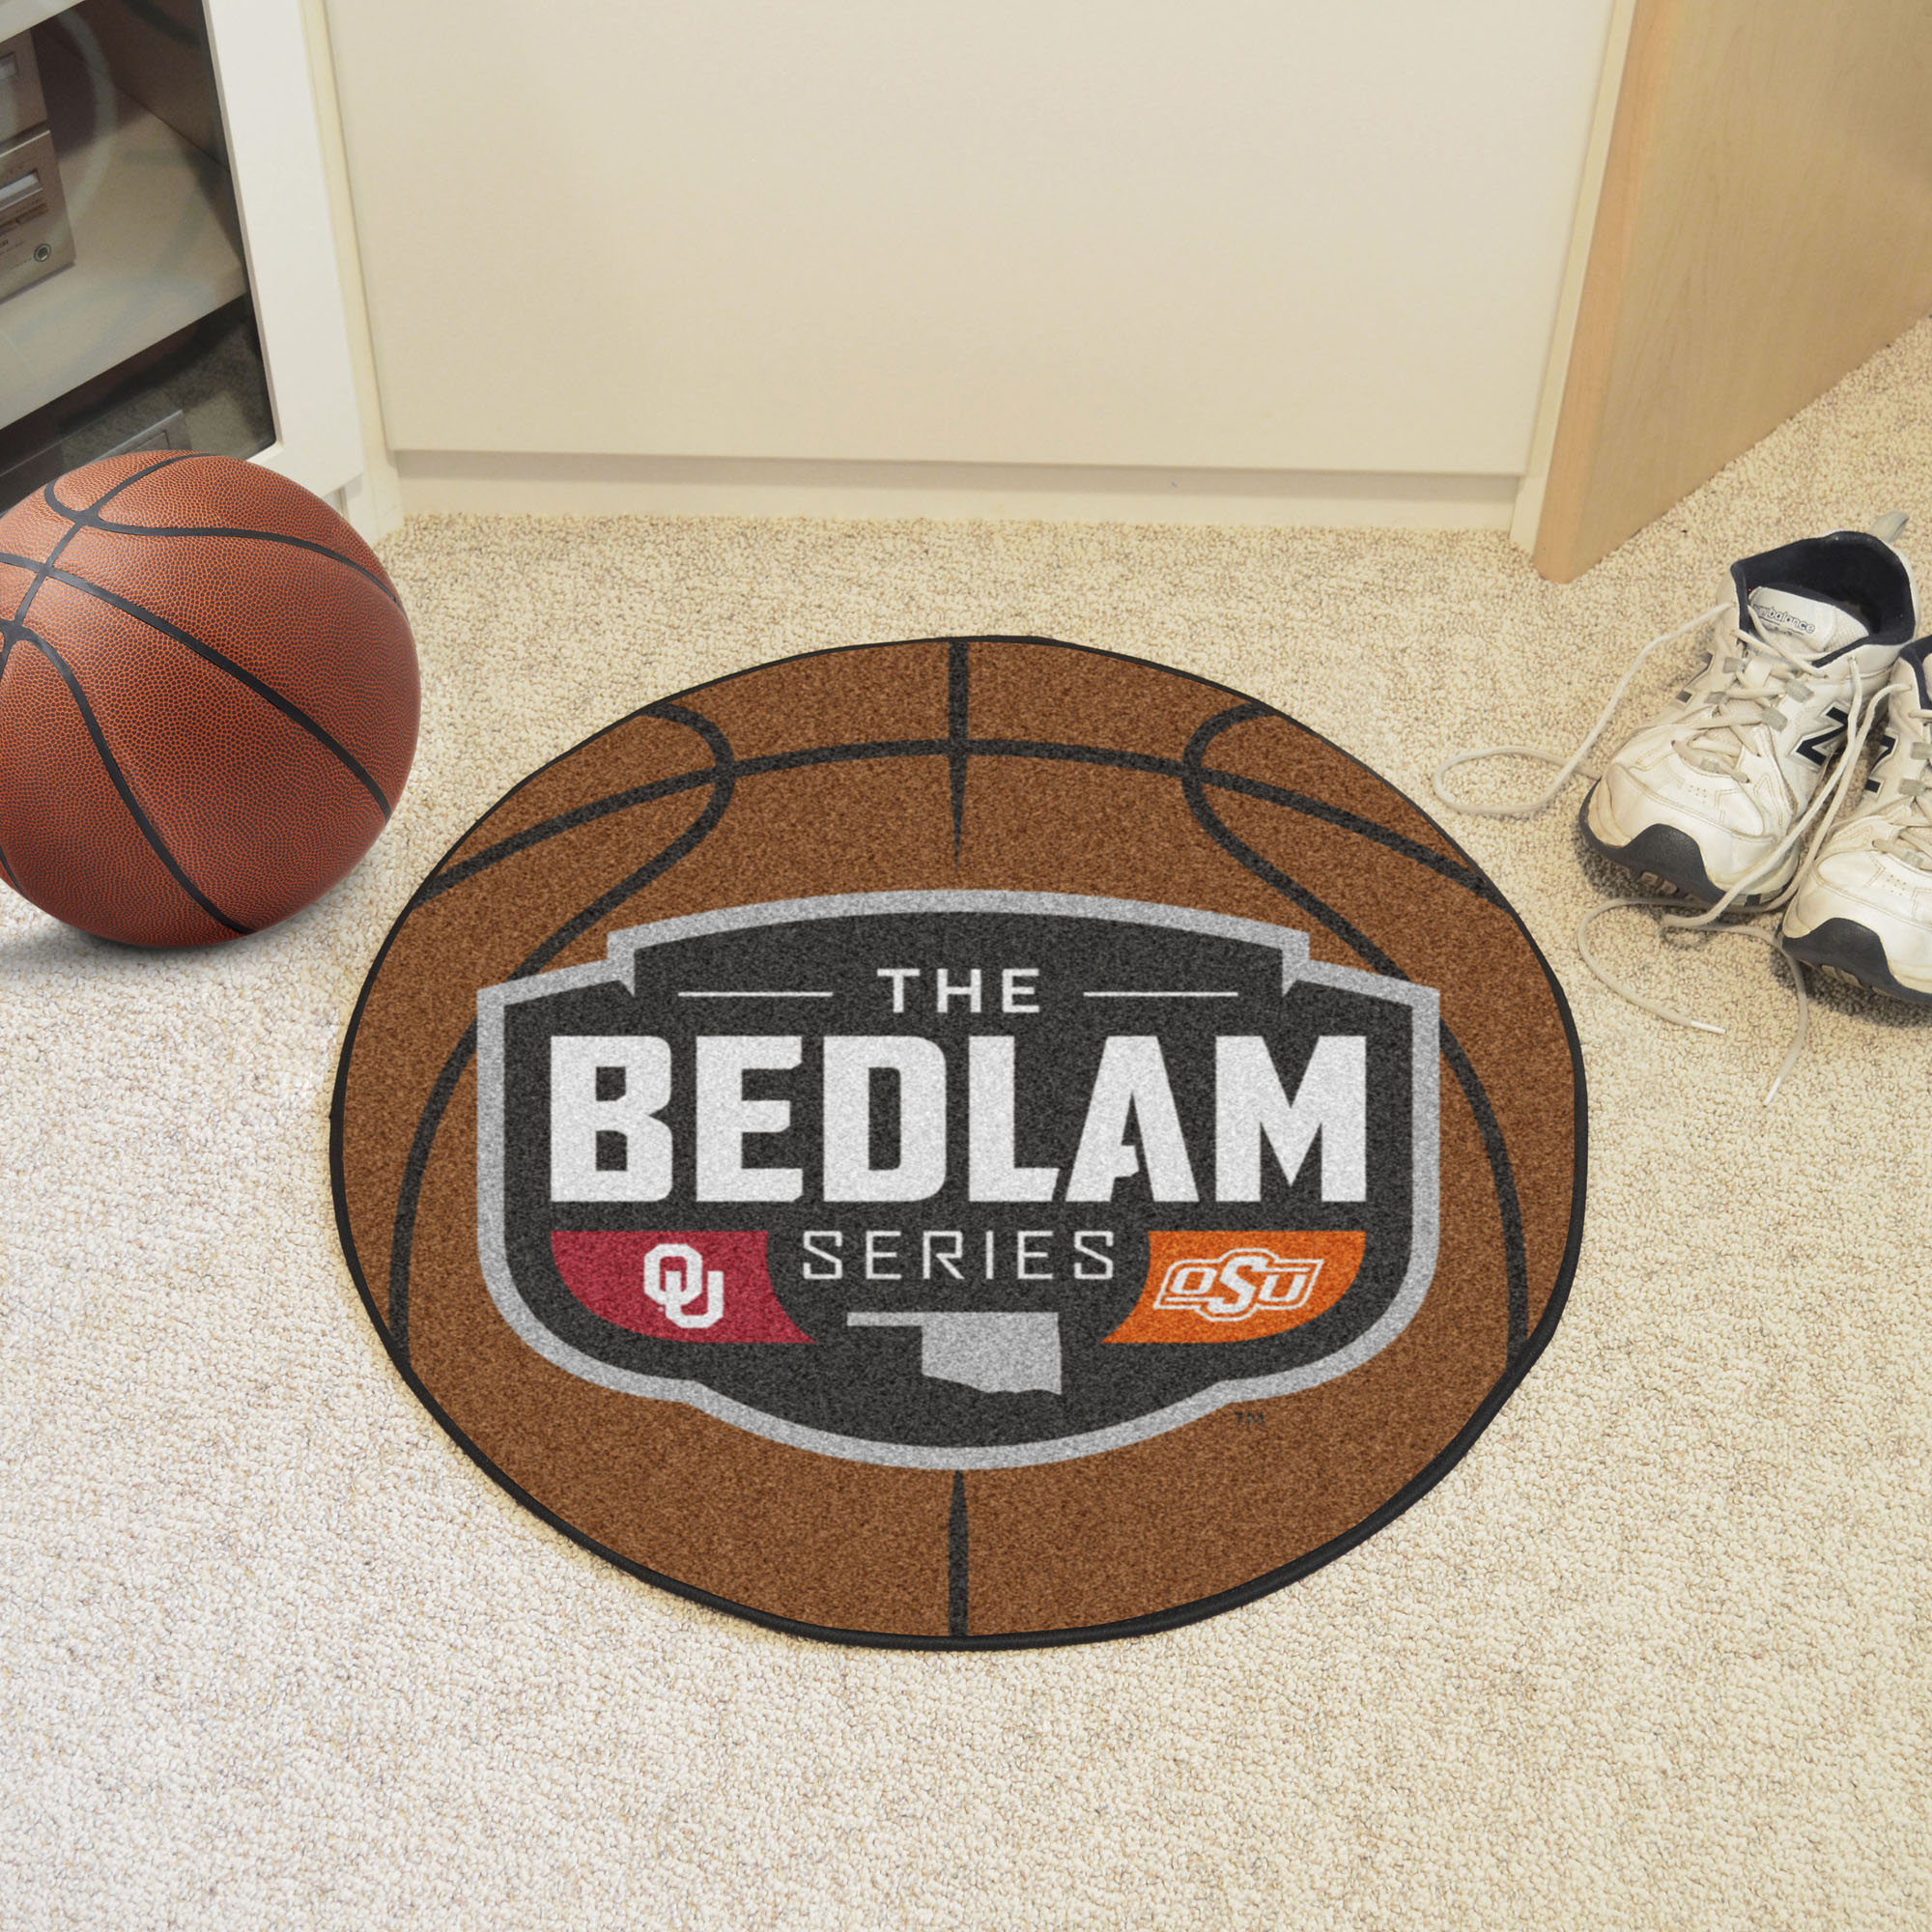 Bedlam Series Ball Shaped Area Rugs (Ball Shaped Area Rugs: Basketball)